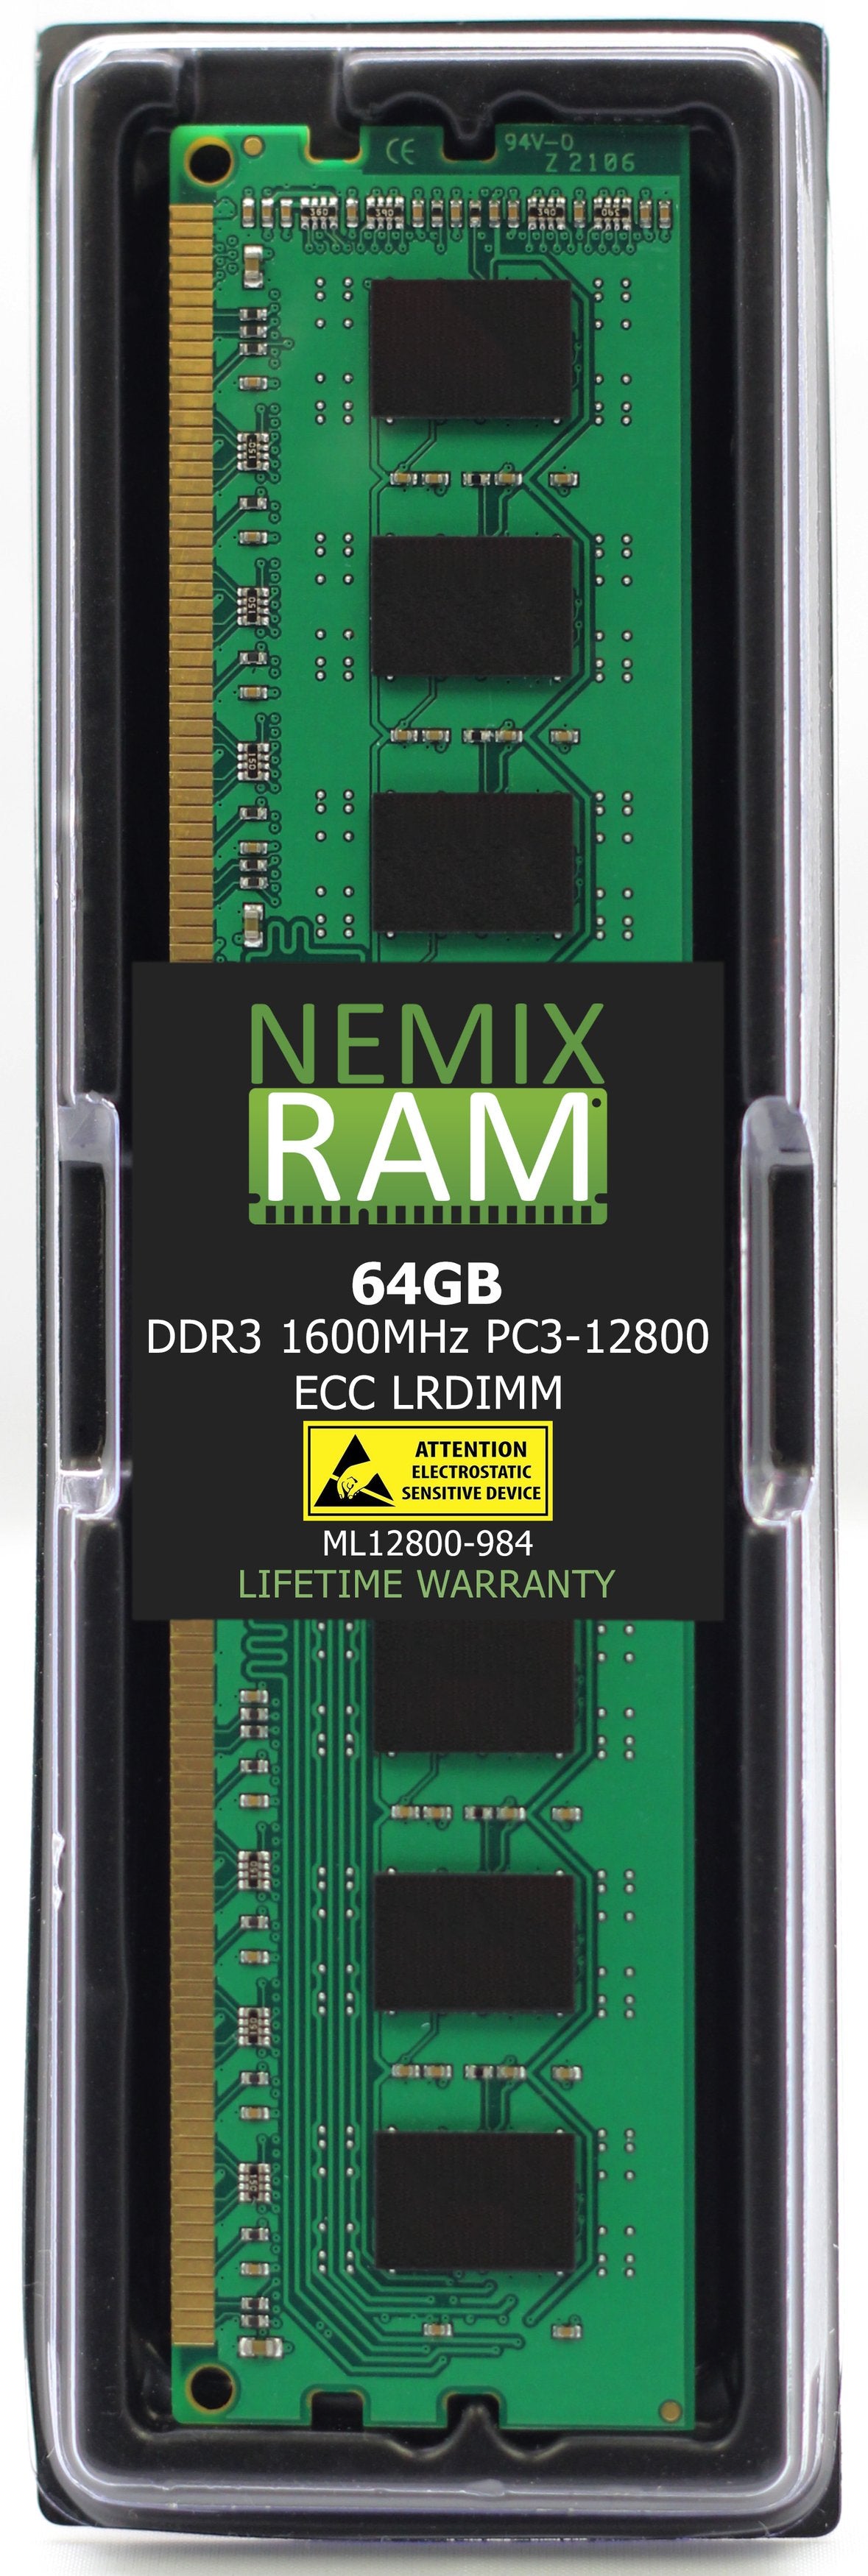 Hynix HMTA8GL7AHR4C-PB 64GB DDR3 1600MHZ PC3-12800 LRDIMM Compatible Memory Module